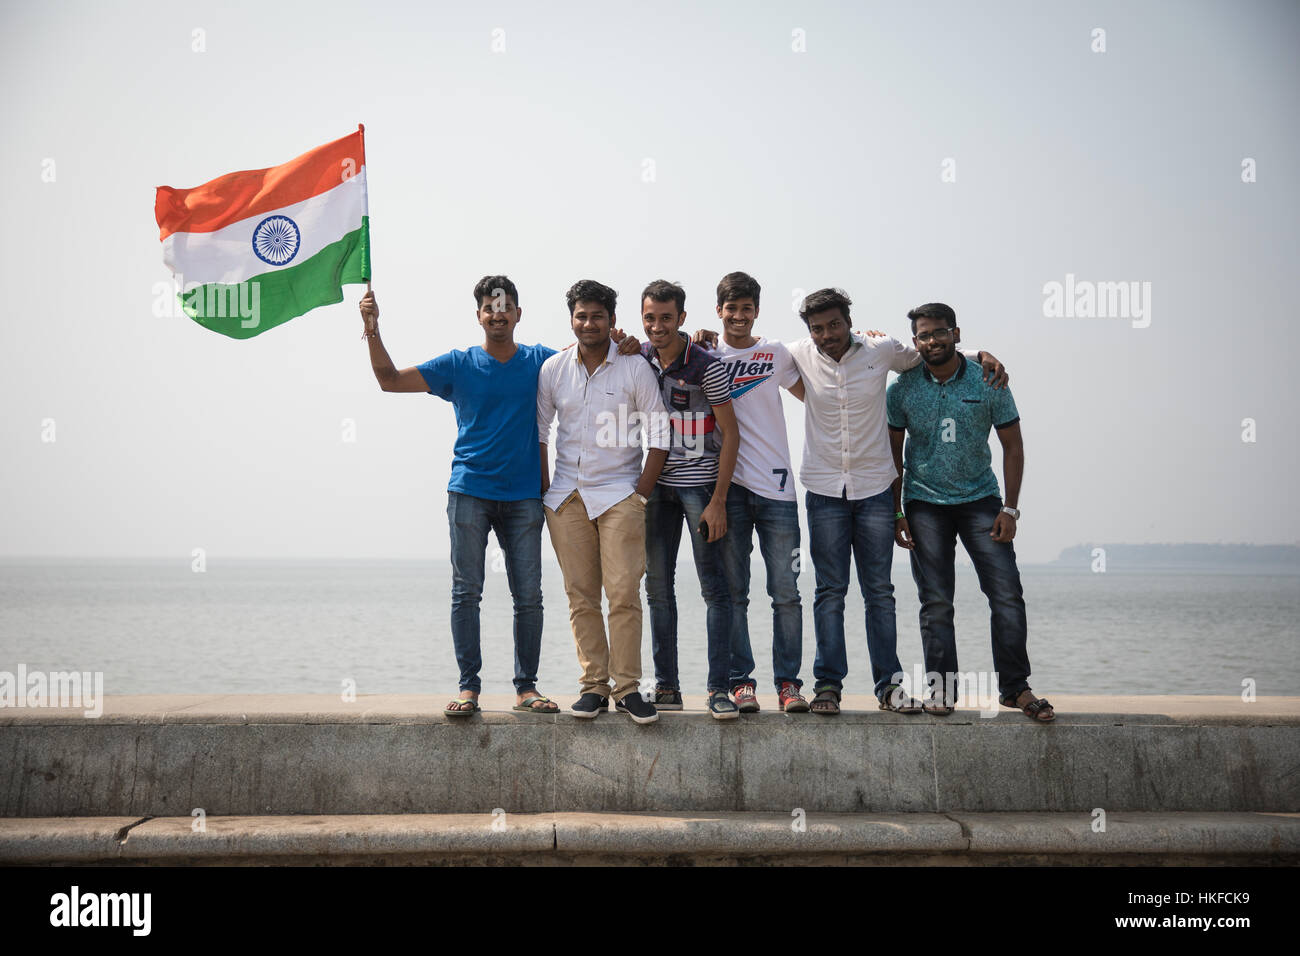 Leute feiern Tag der Republik am Marine Drive in Mumbai (Bombay), Indien. Stockfoto